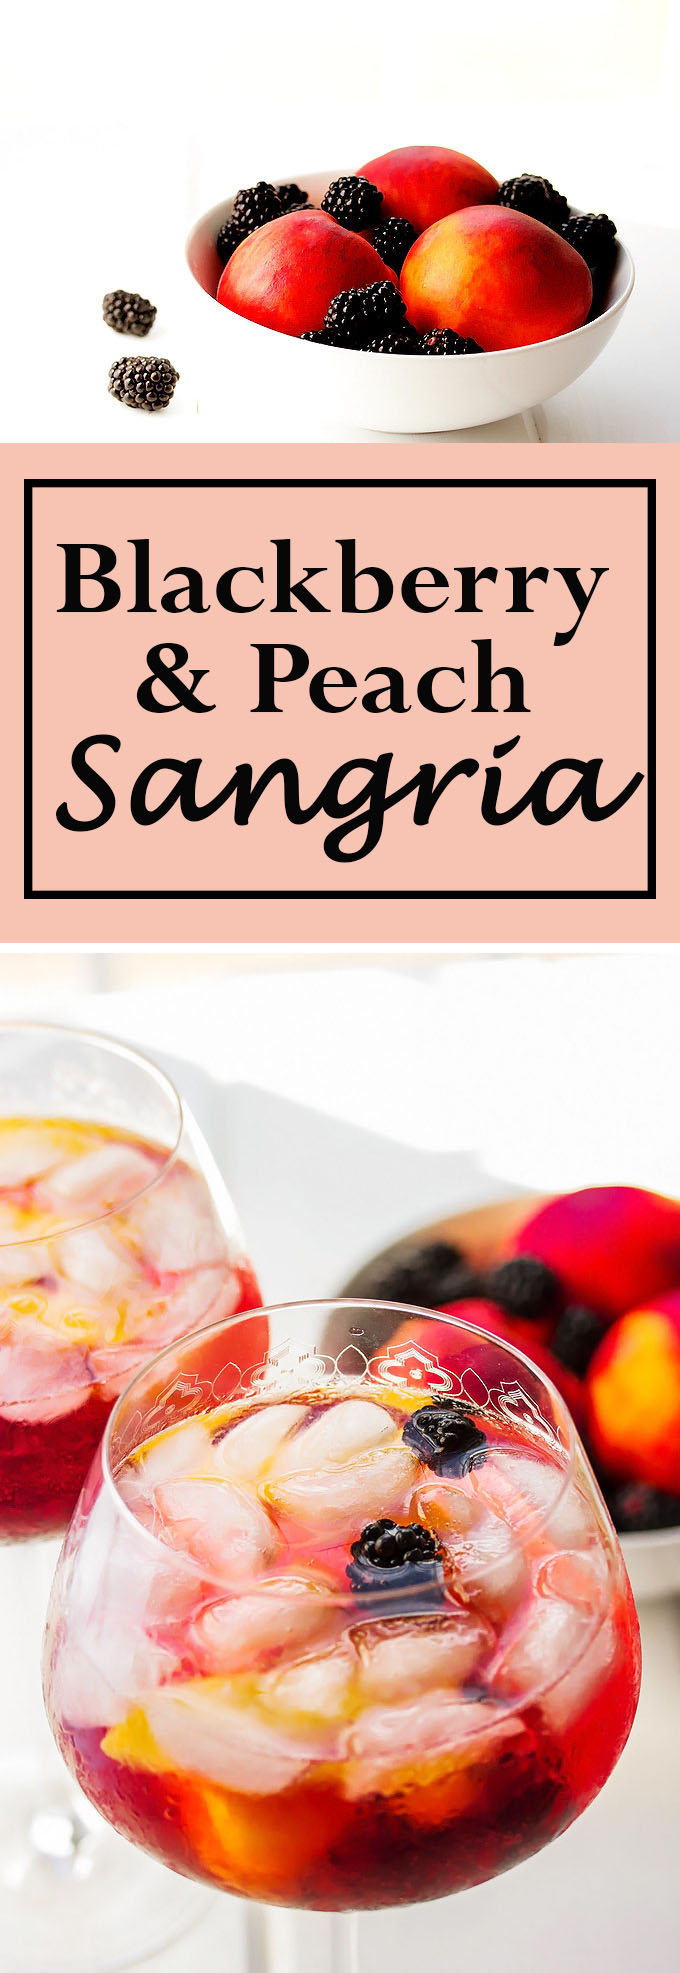 Blackberry and Peach Sangria